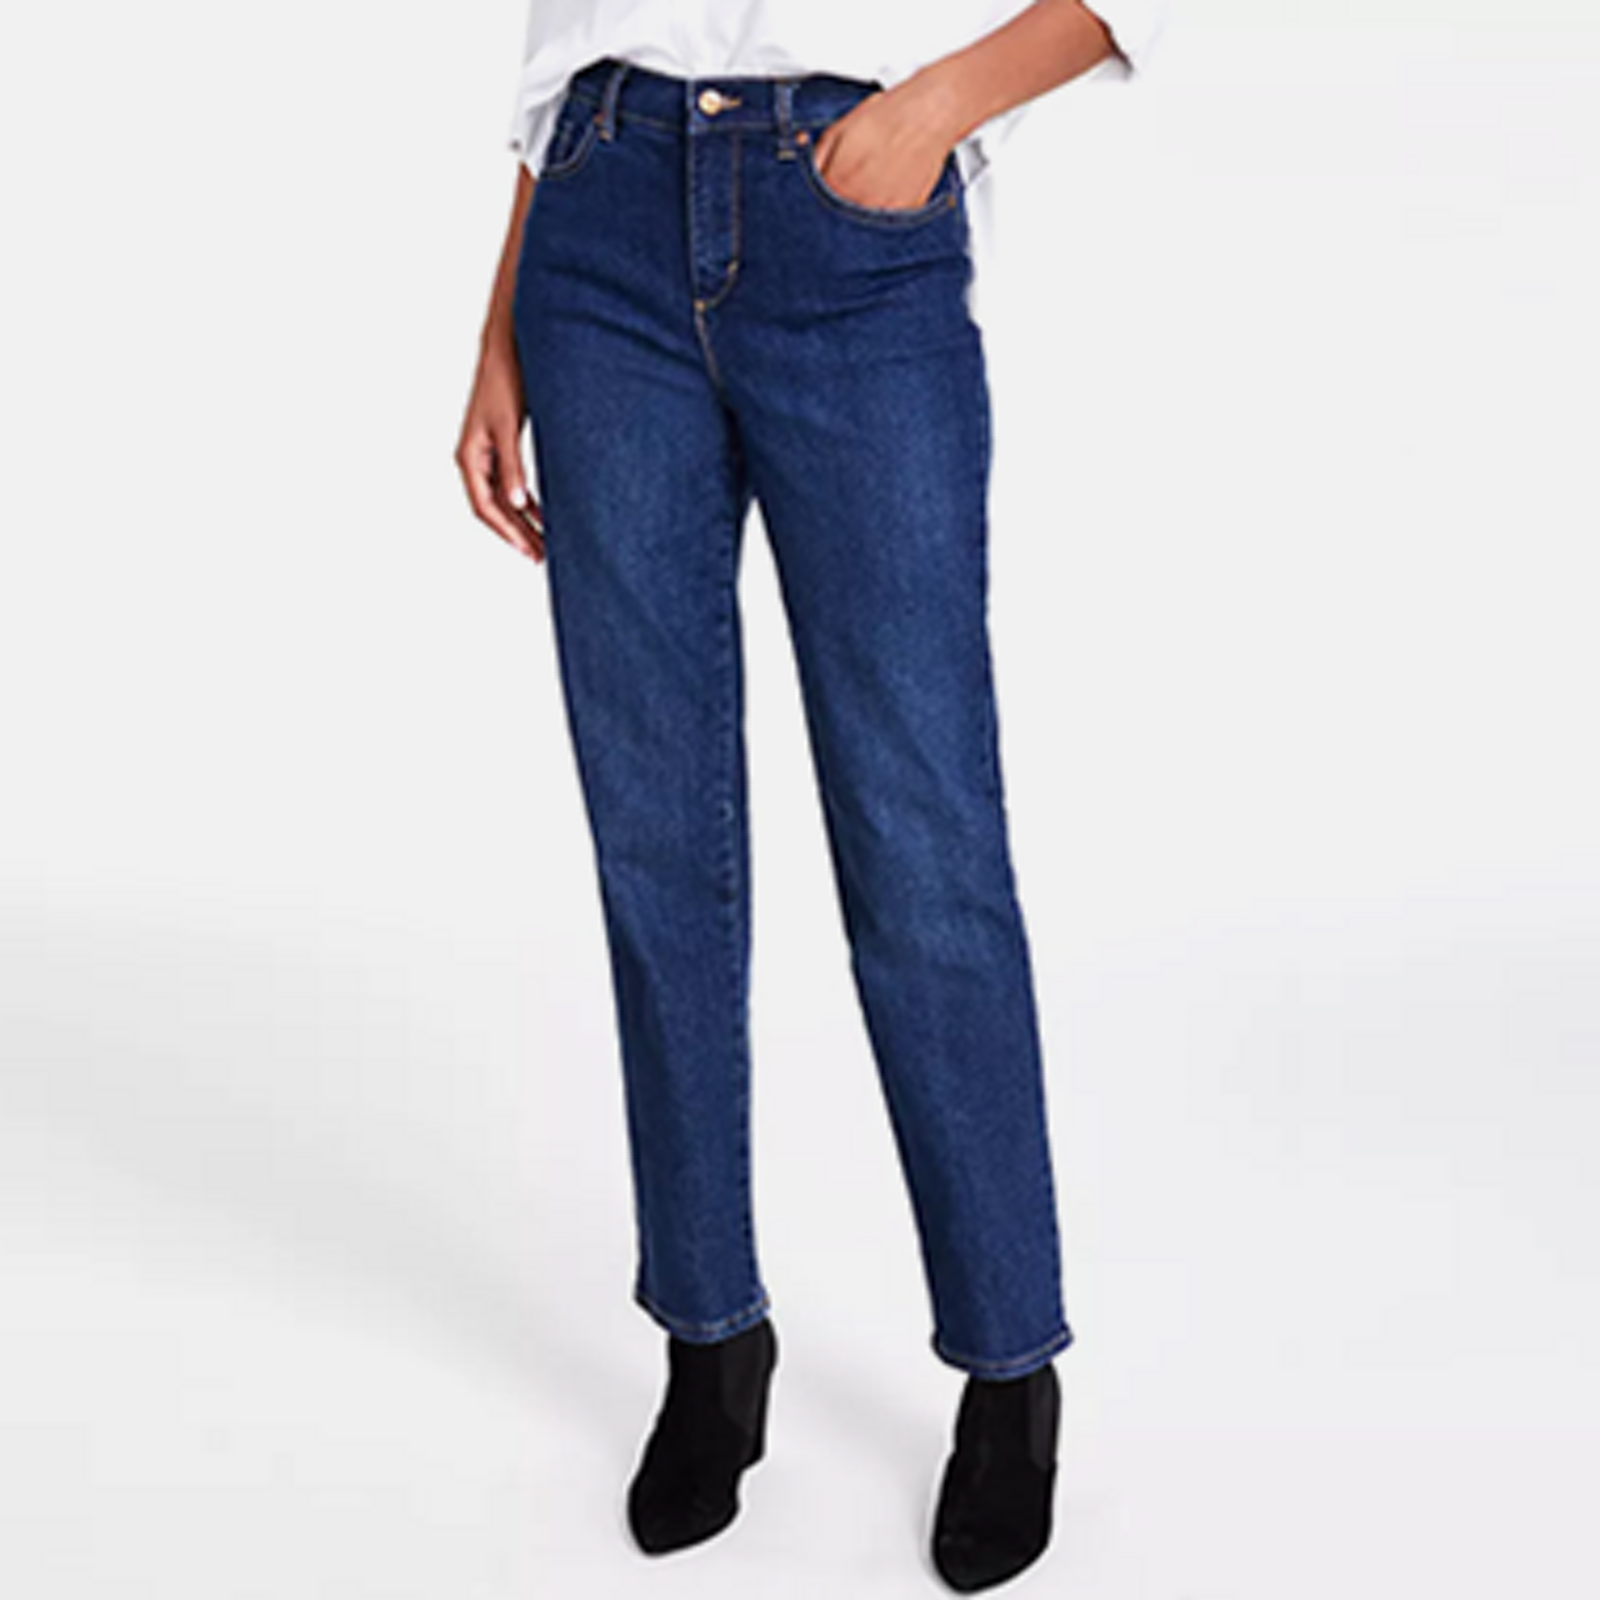 Jeggings Cotton Jeans For Women - Macy's